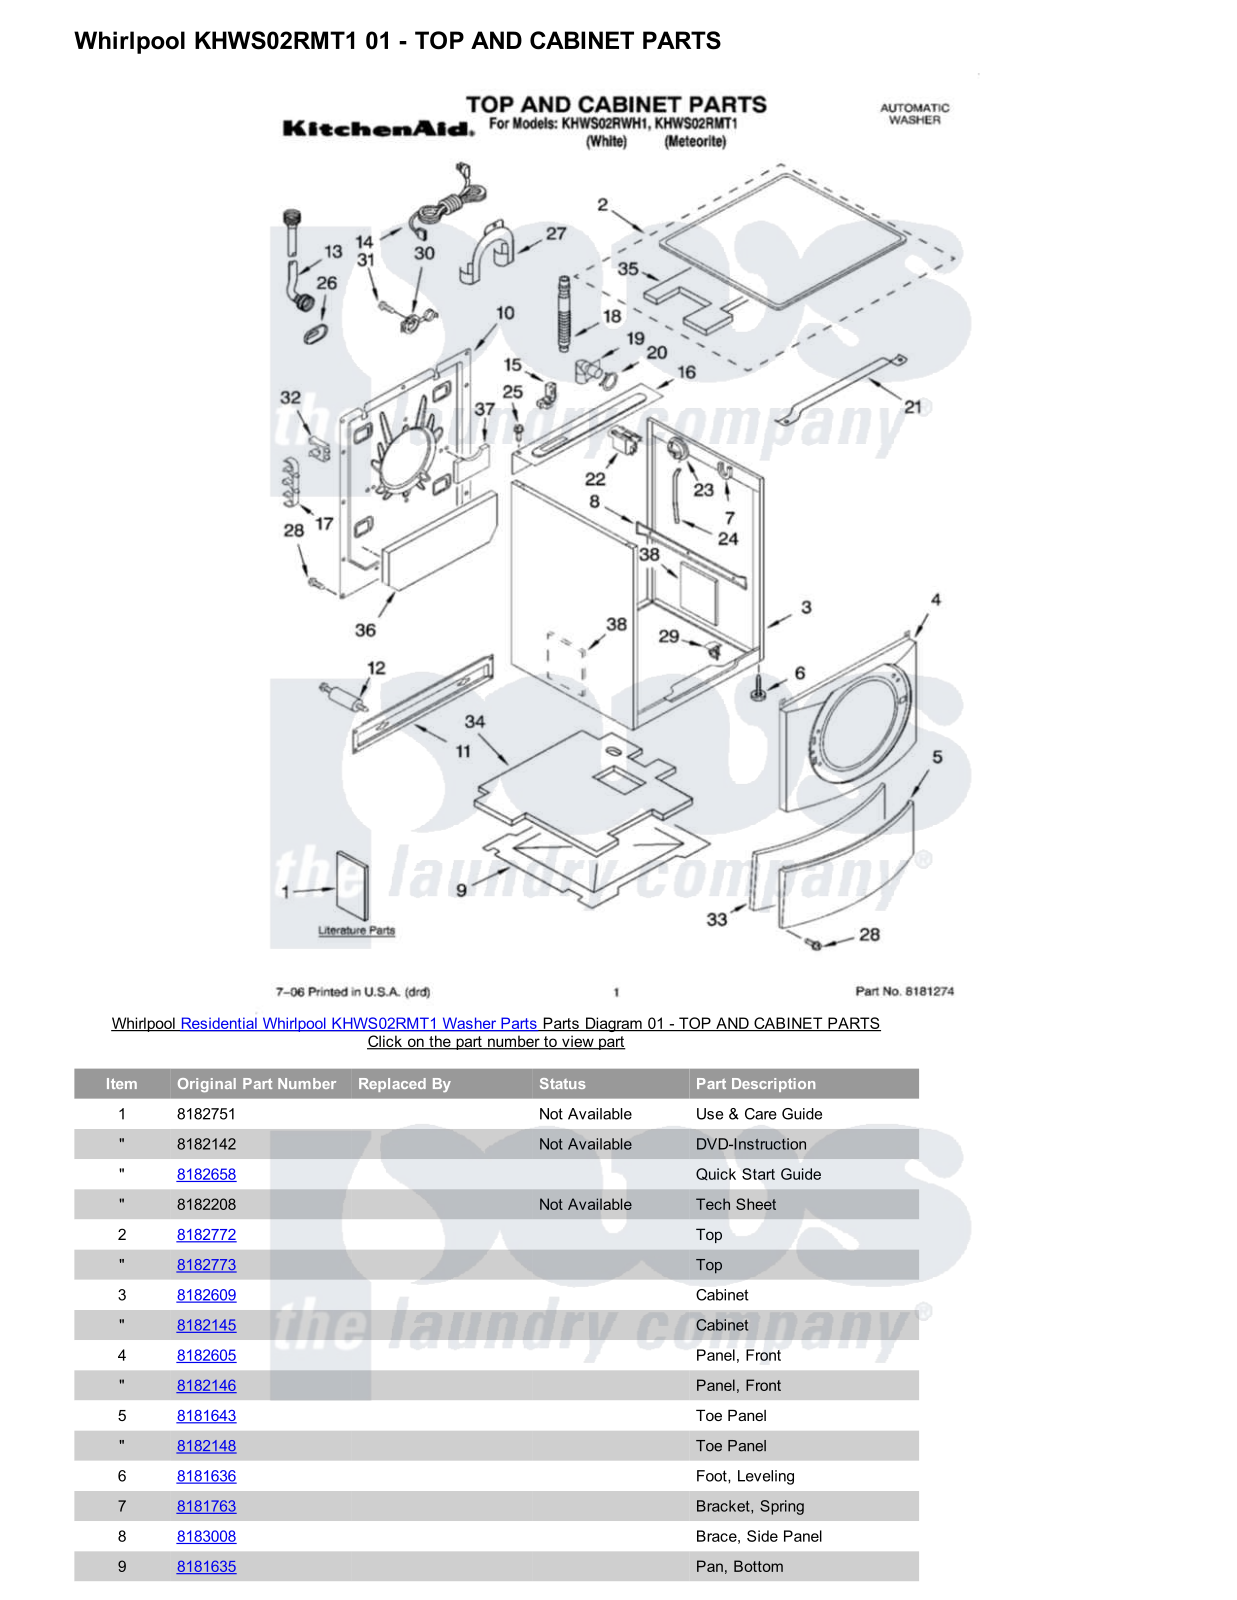 Whirlpool KHWS02RMT1 Parts Diagram